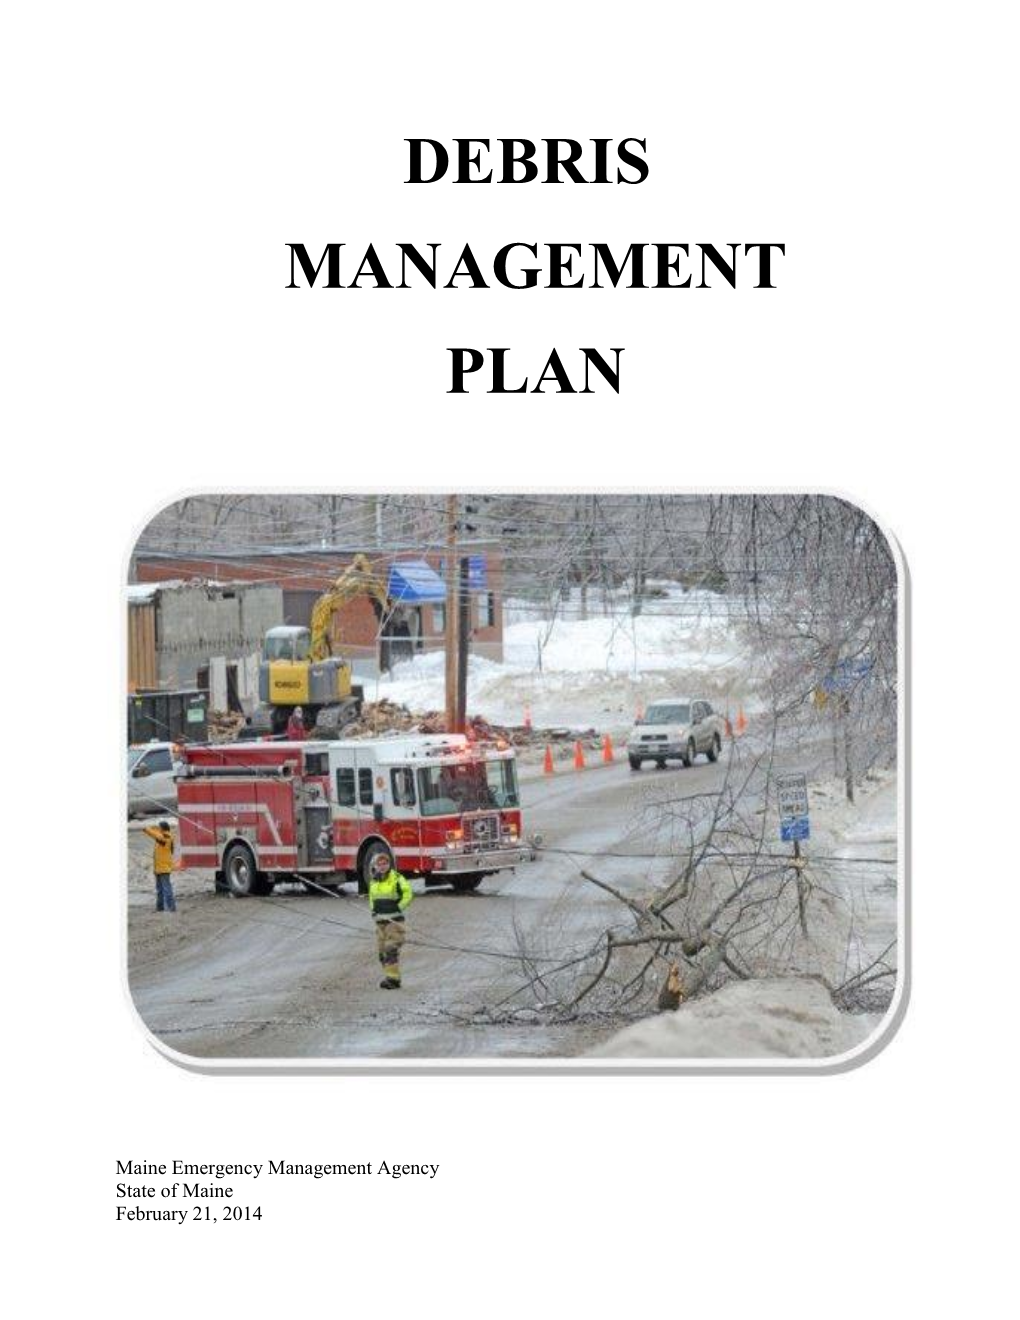 Debris Management Plan